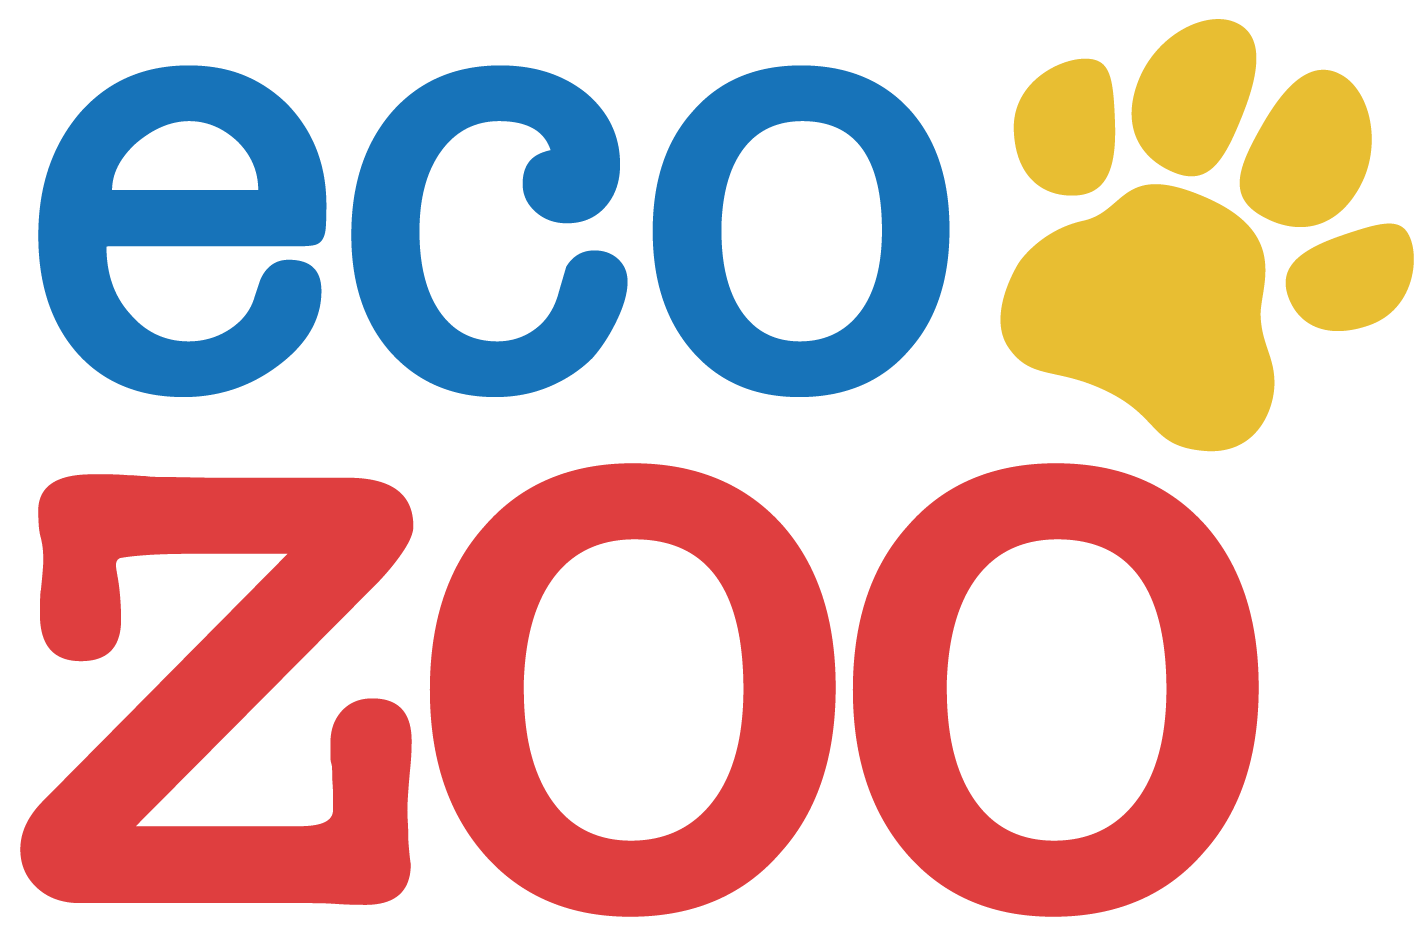 logo-ecozoo2